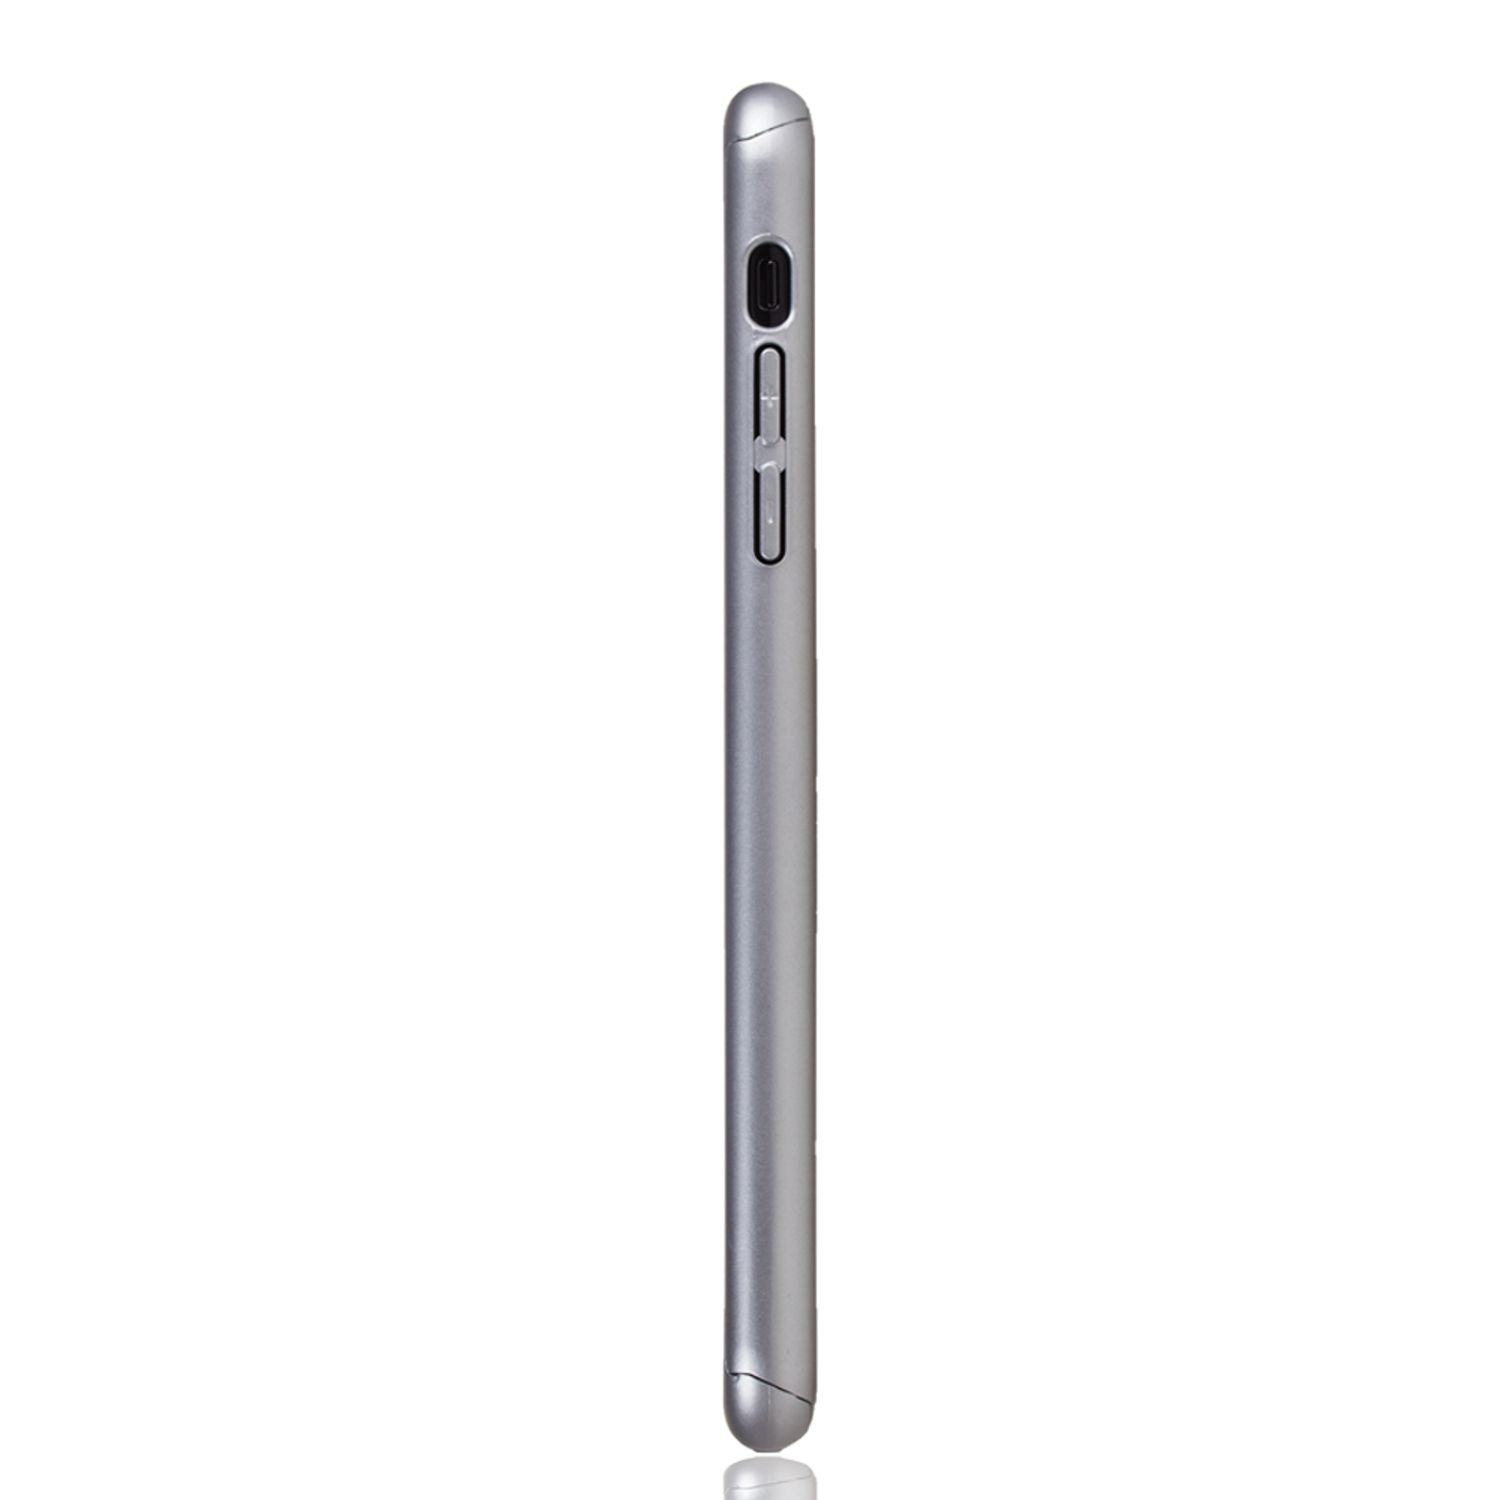 KÖNIG DESIGN Silber Handyhülle 11 iPhone 360 Pro, Cover, Schutz, Apple, Full Grad